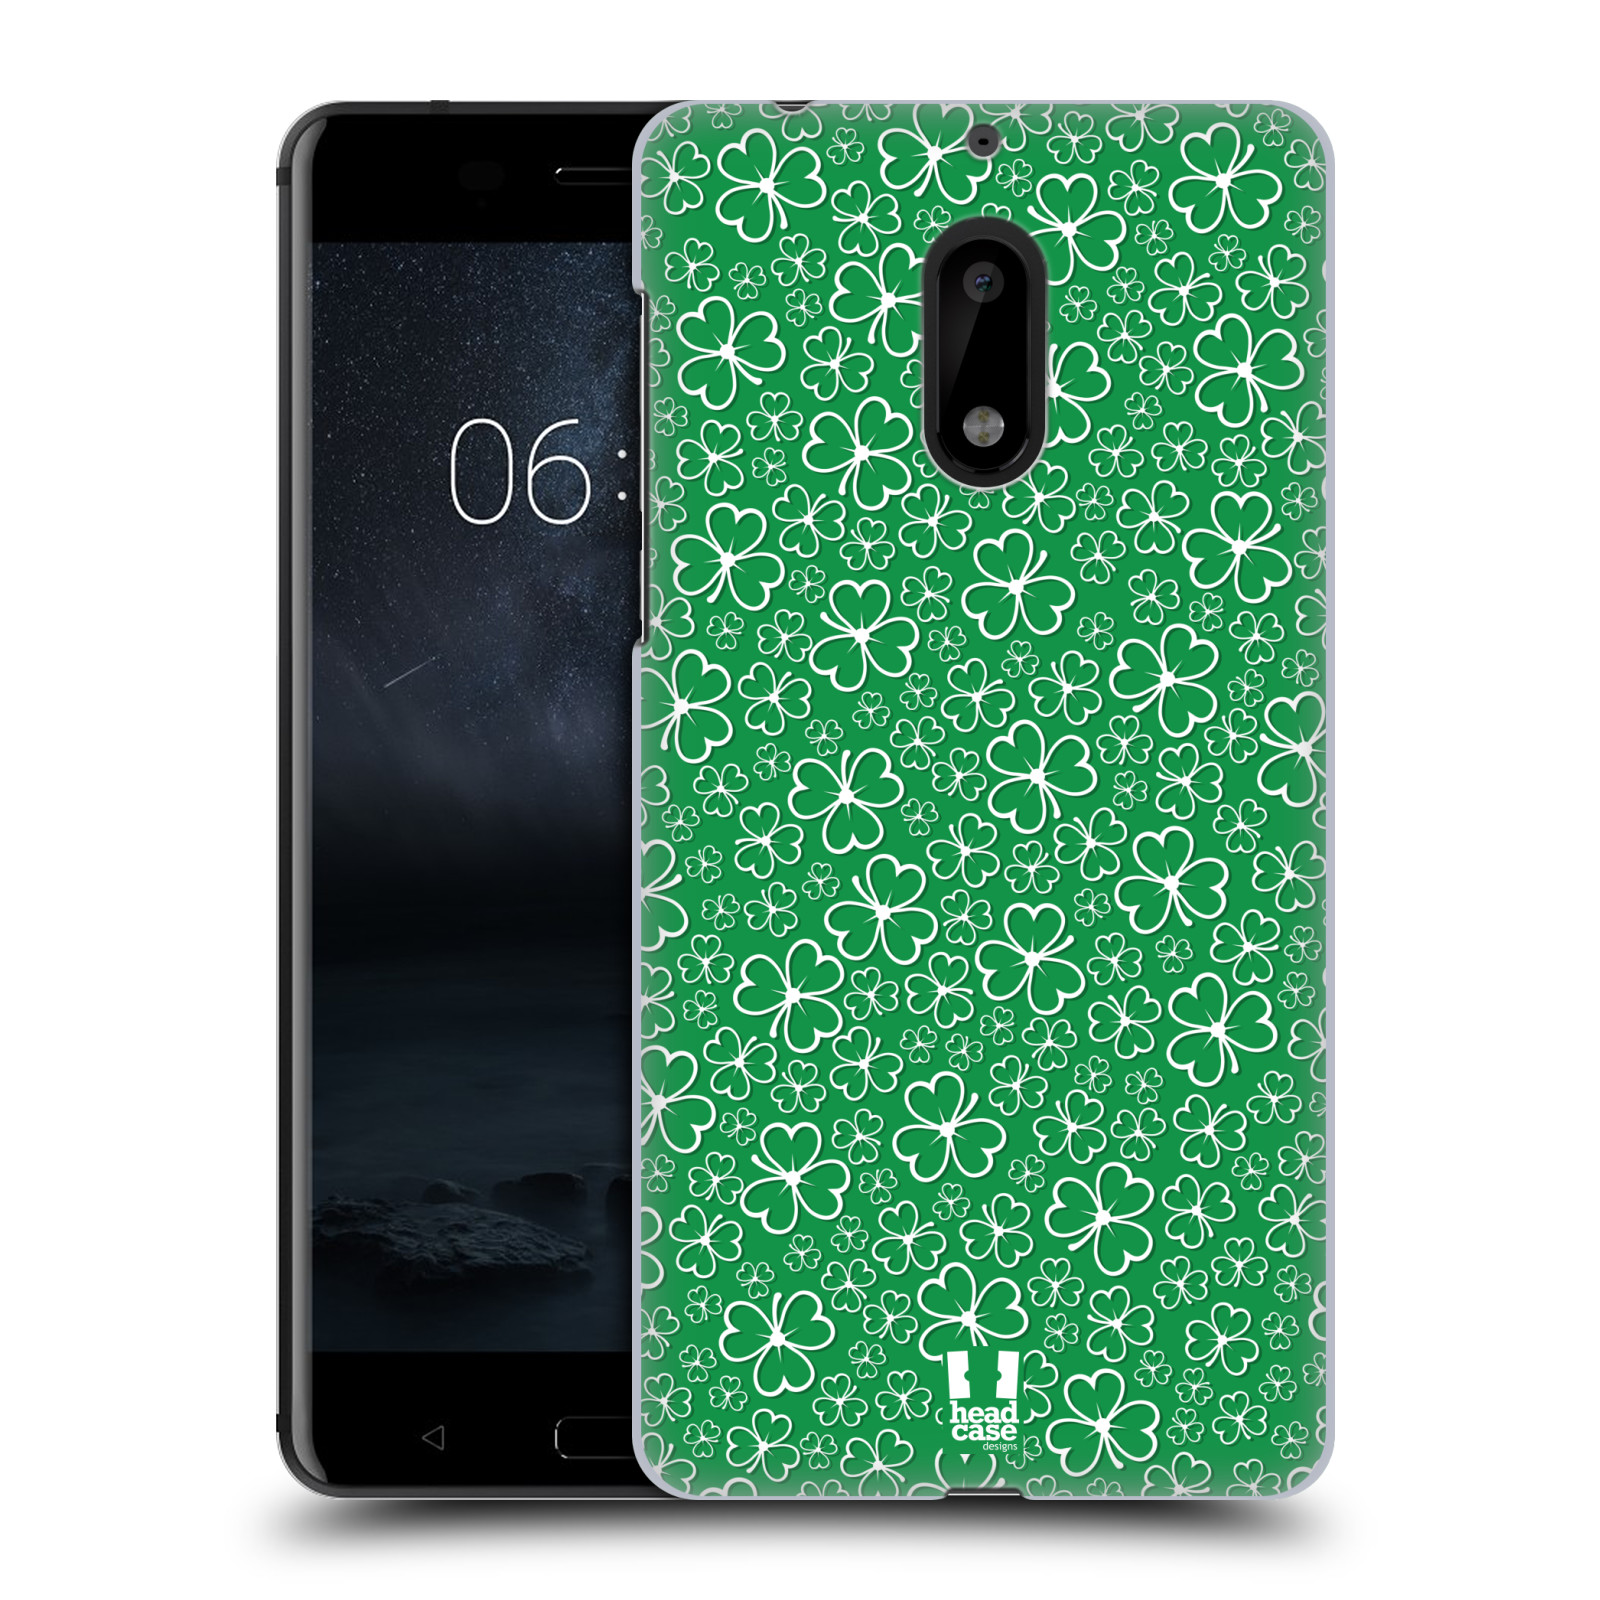 HEAD CASE plastový obal na mobil Nokia 6 vzor Kreslený čyřlístek zelená HROMADA